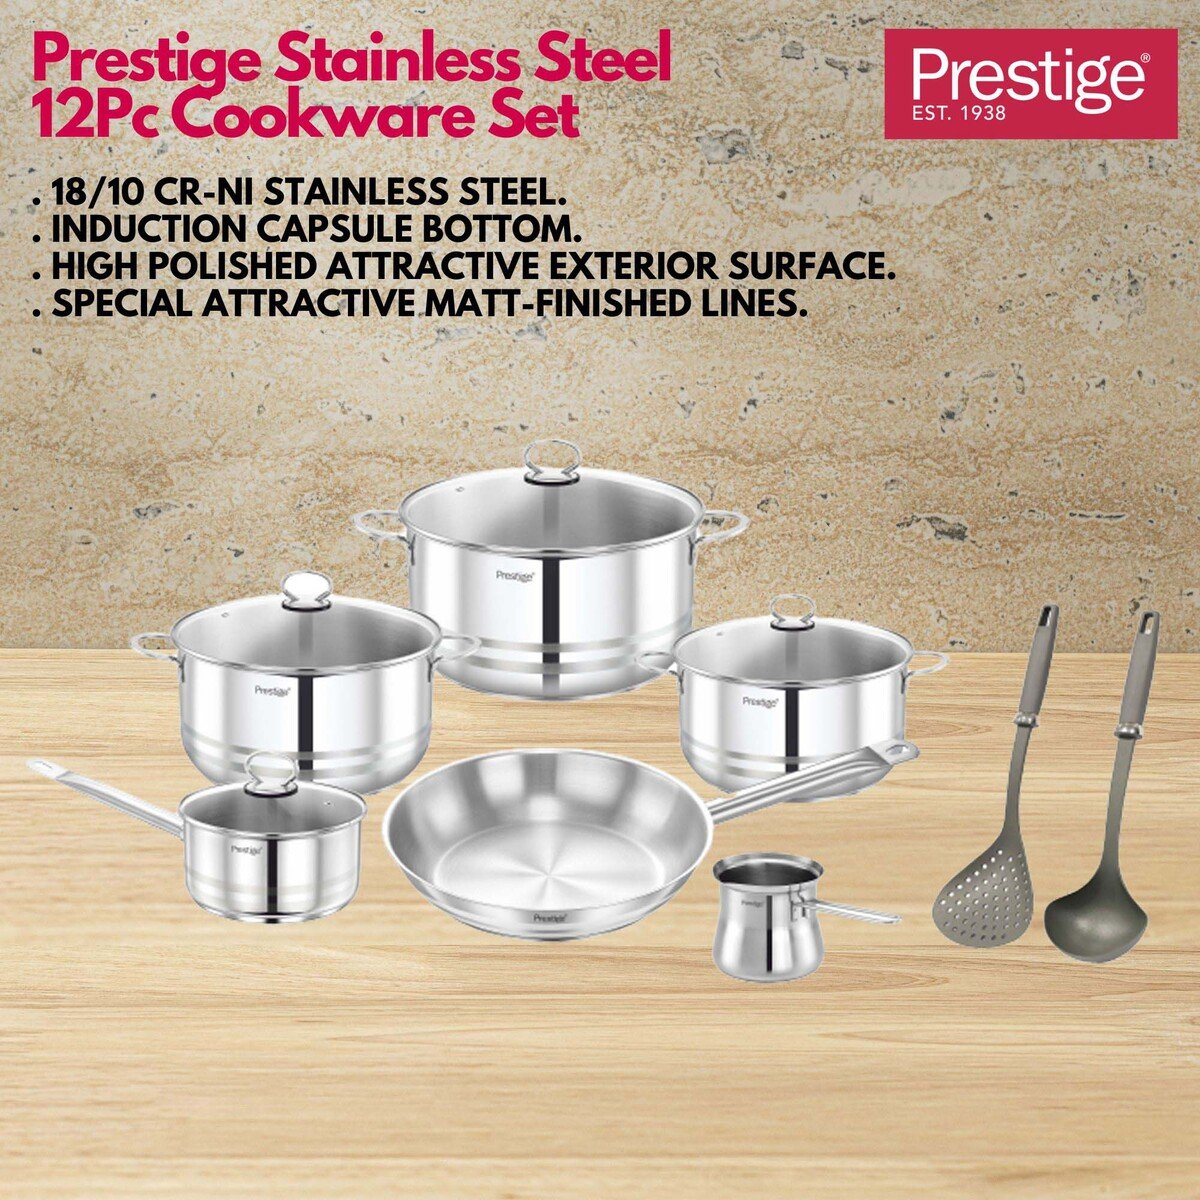 Prestige Stainless Steel Cookware Set 12Pcs Induction Bottom PR80981